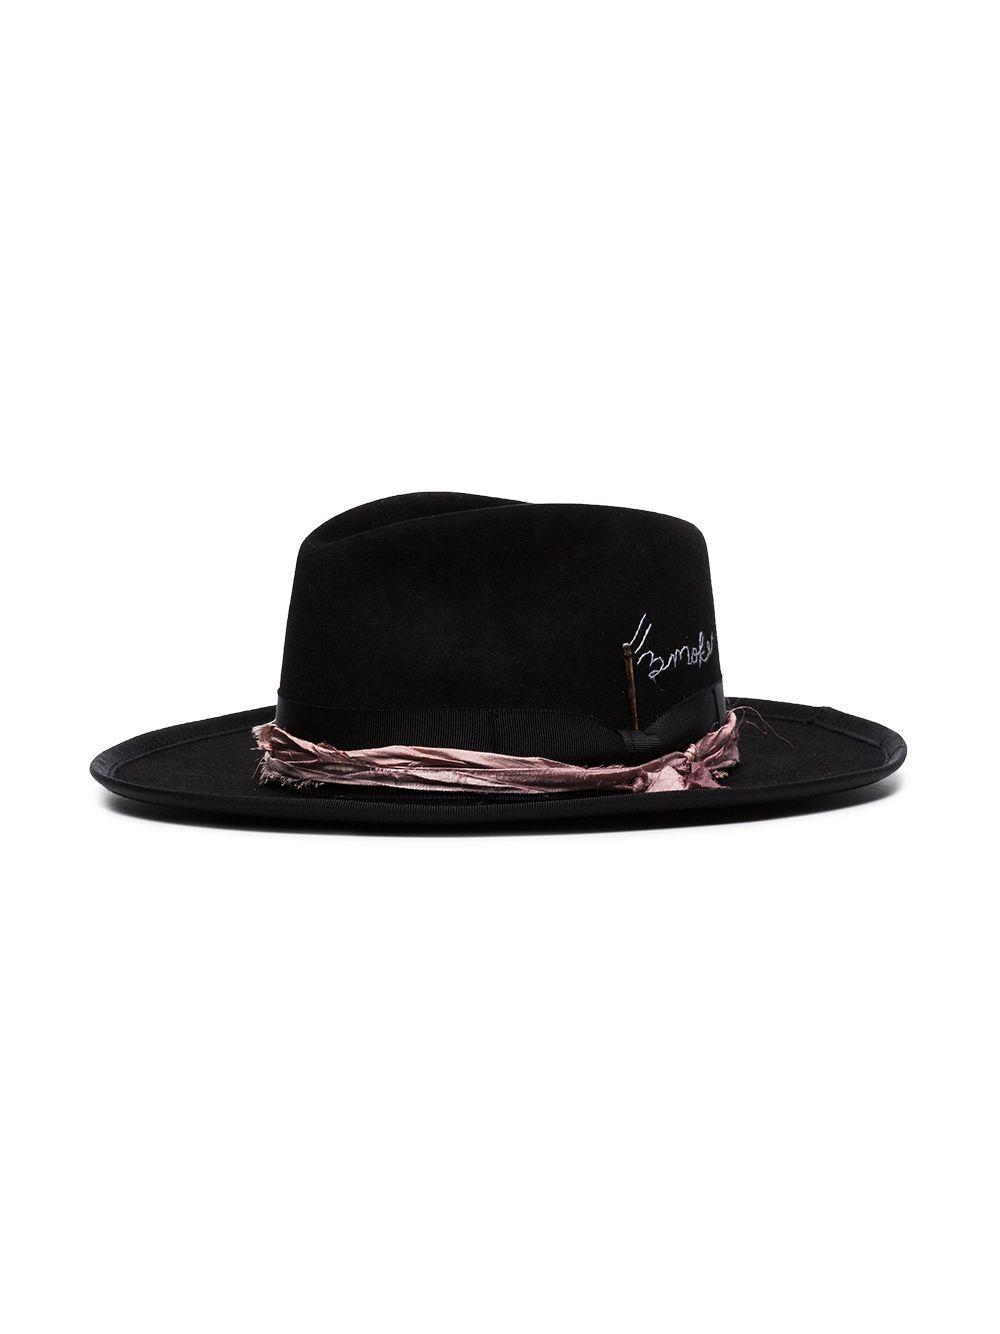 Nick Fouquet Embroidered Slogan Fedora Hat in Black | Lyst